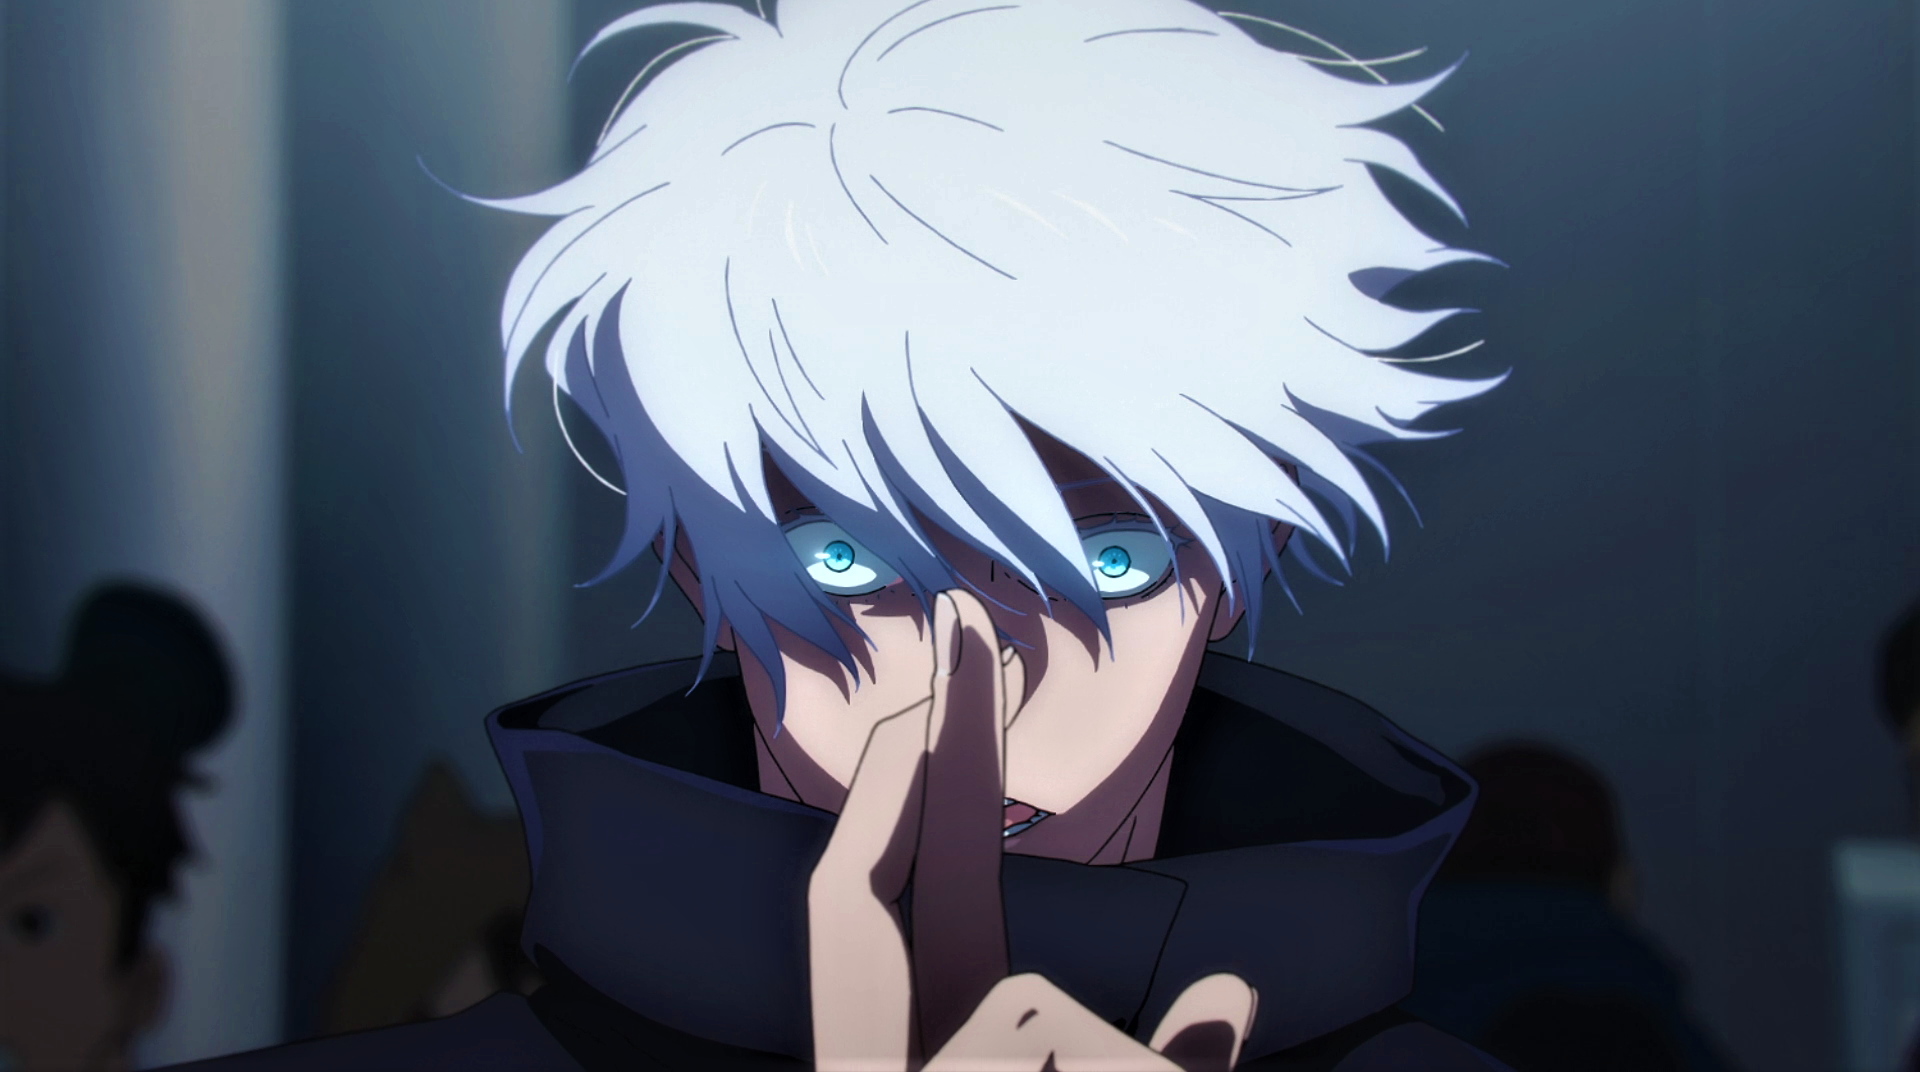 Anime 1920x1072 Jujutsu Kaisen Satoru Gojo hands blue eyes glowing eyes white hair anime Anime screenshot anime boys